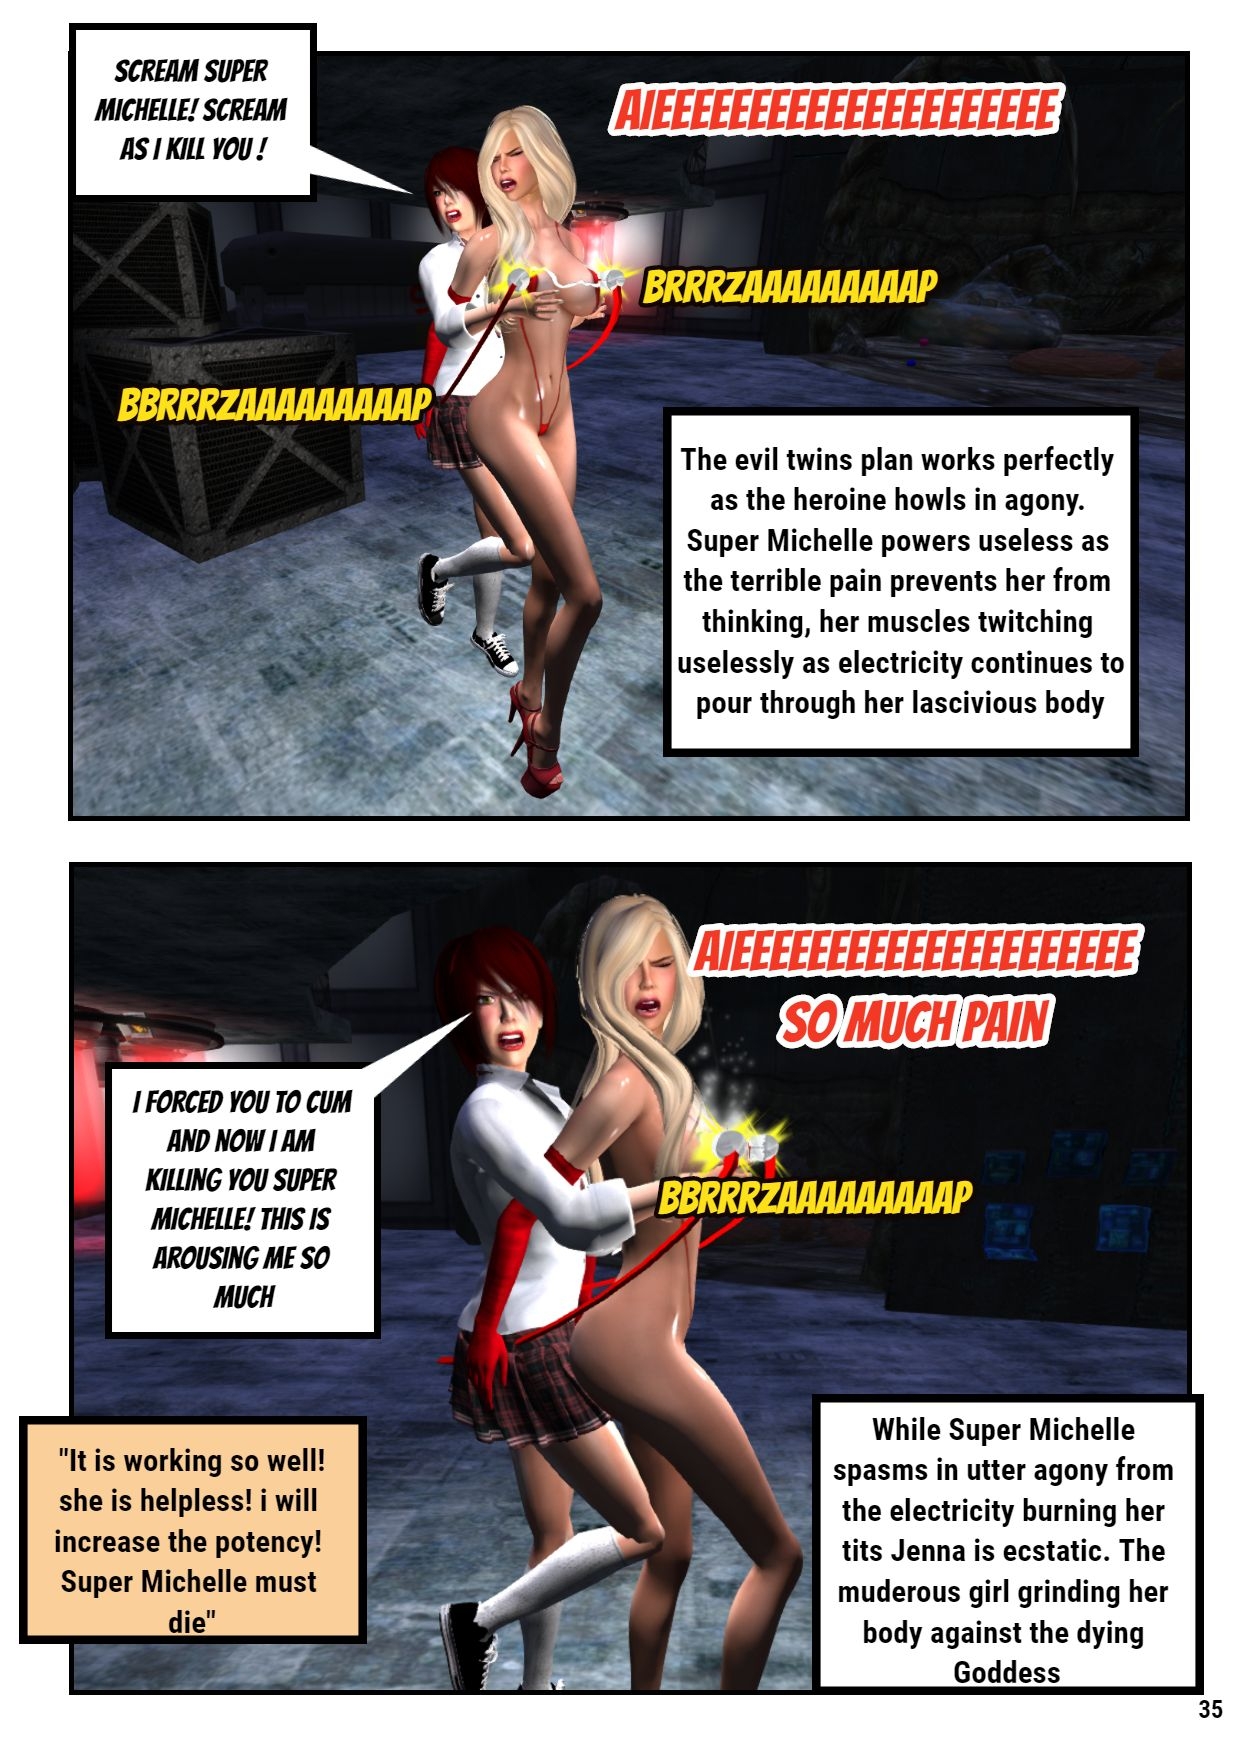 Super Michelle vs the Evil Twins - Superheroine in peril - Heroine comics 38